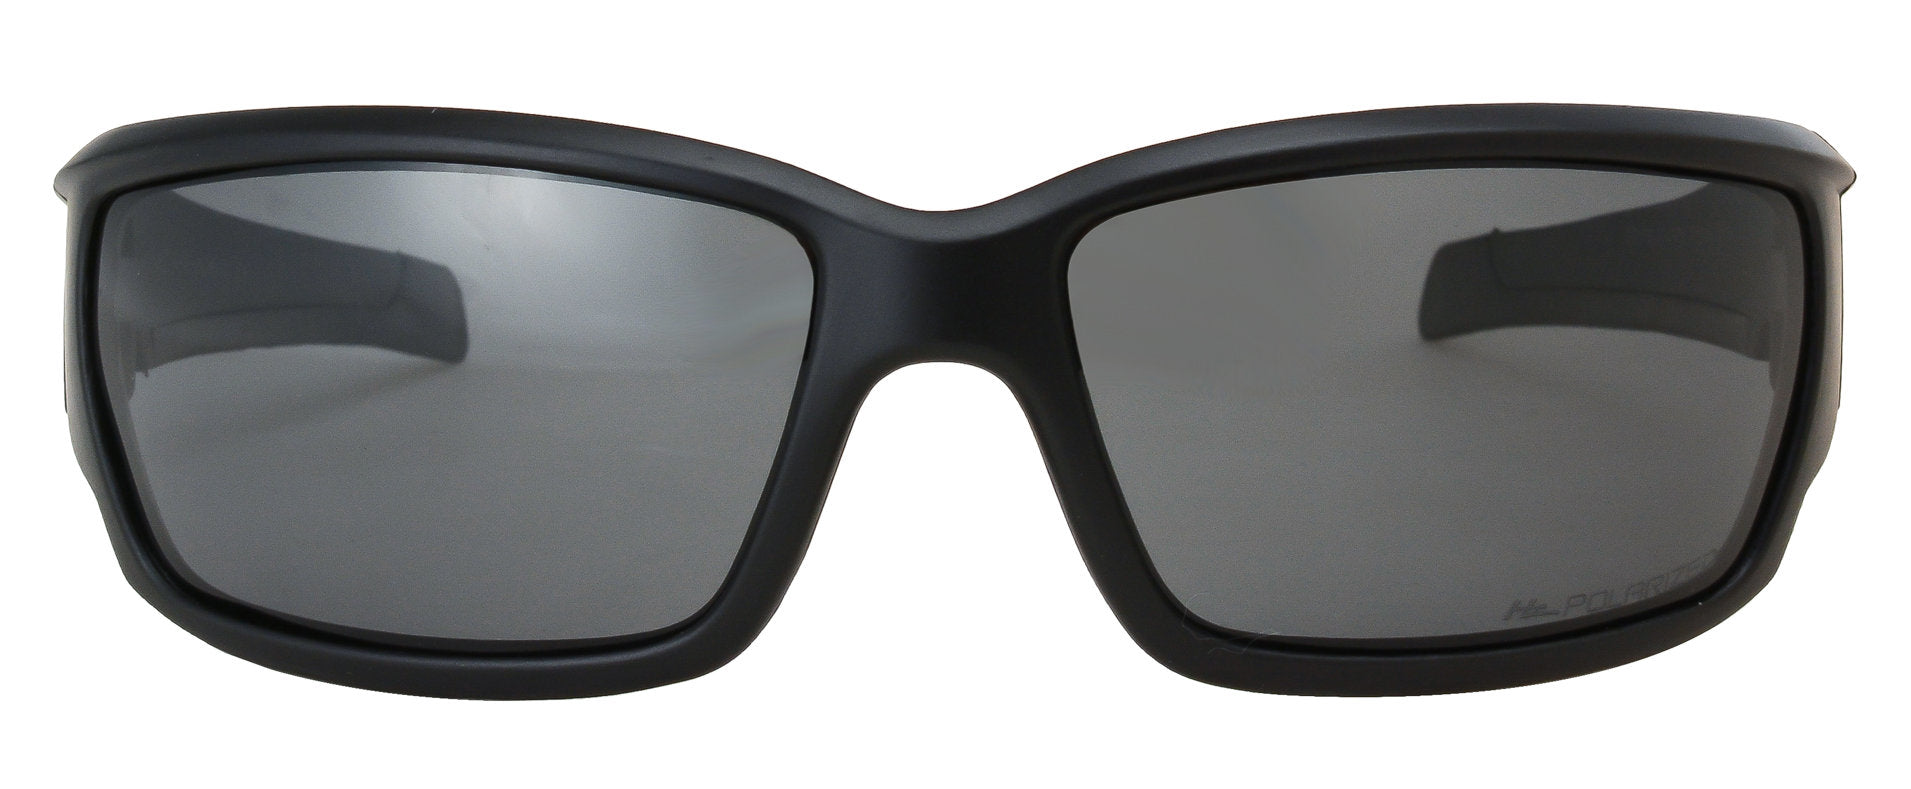 Second image: HZ Series Superfit - Premium Polarized Sunglasses by Hornz – Sunglasses for Men – Full Frame Strong Arms – Matte Black Frame – Dark Smoke Lens